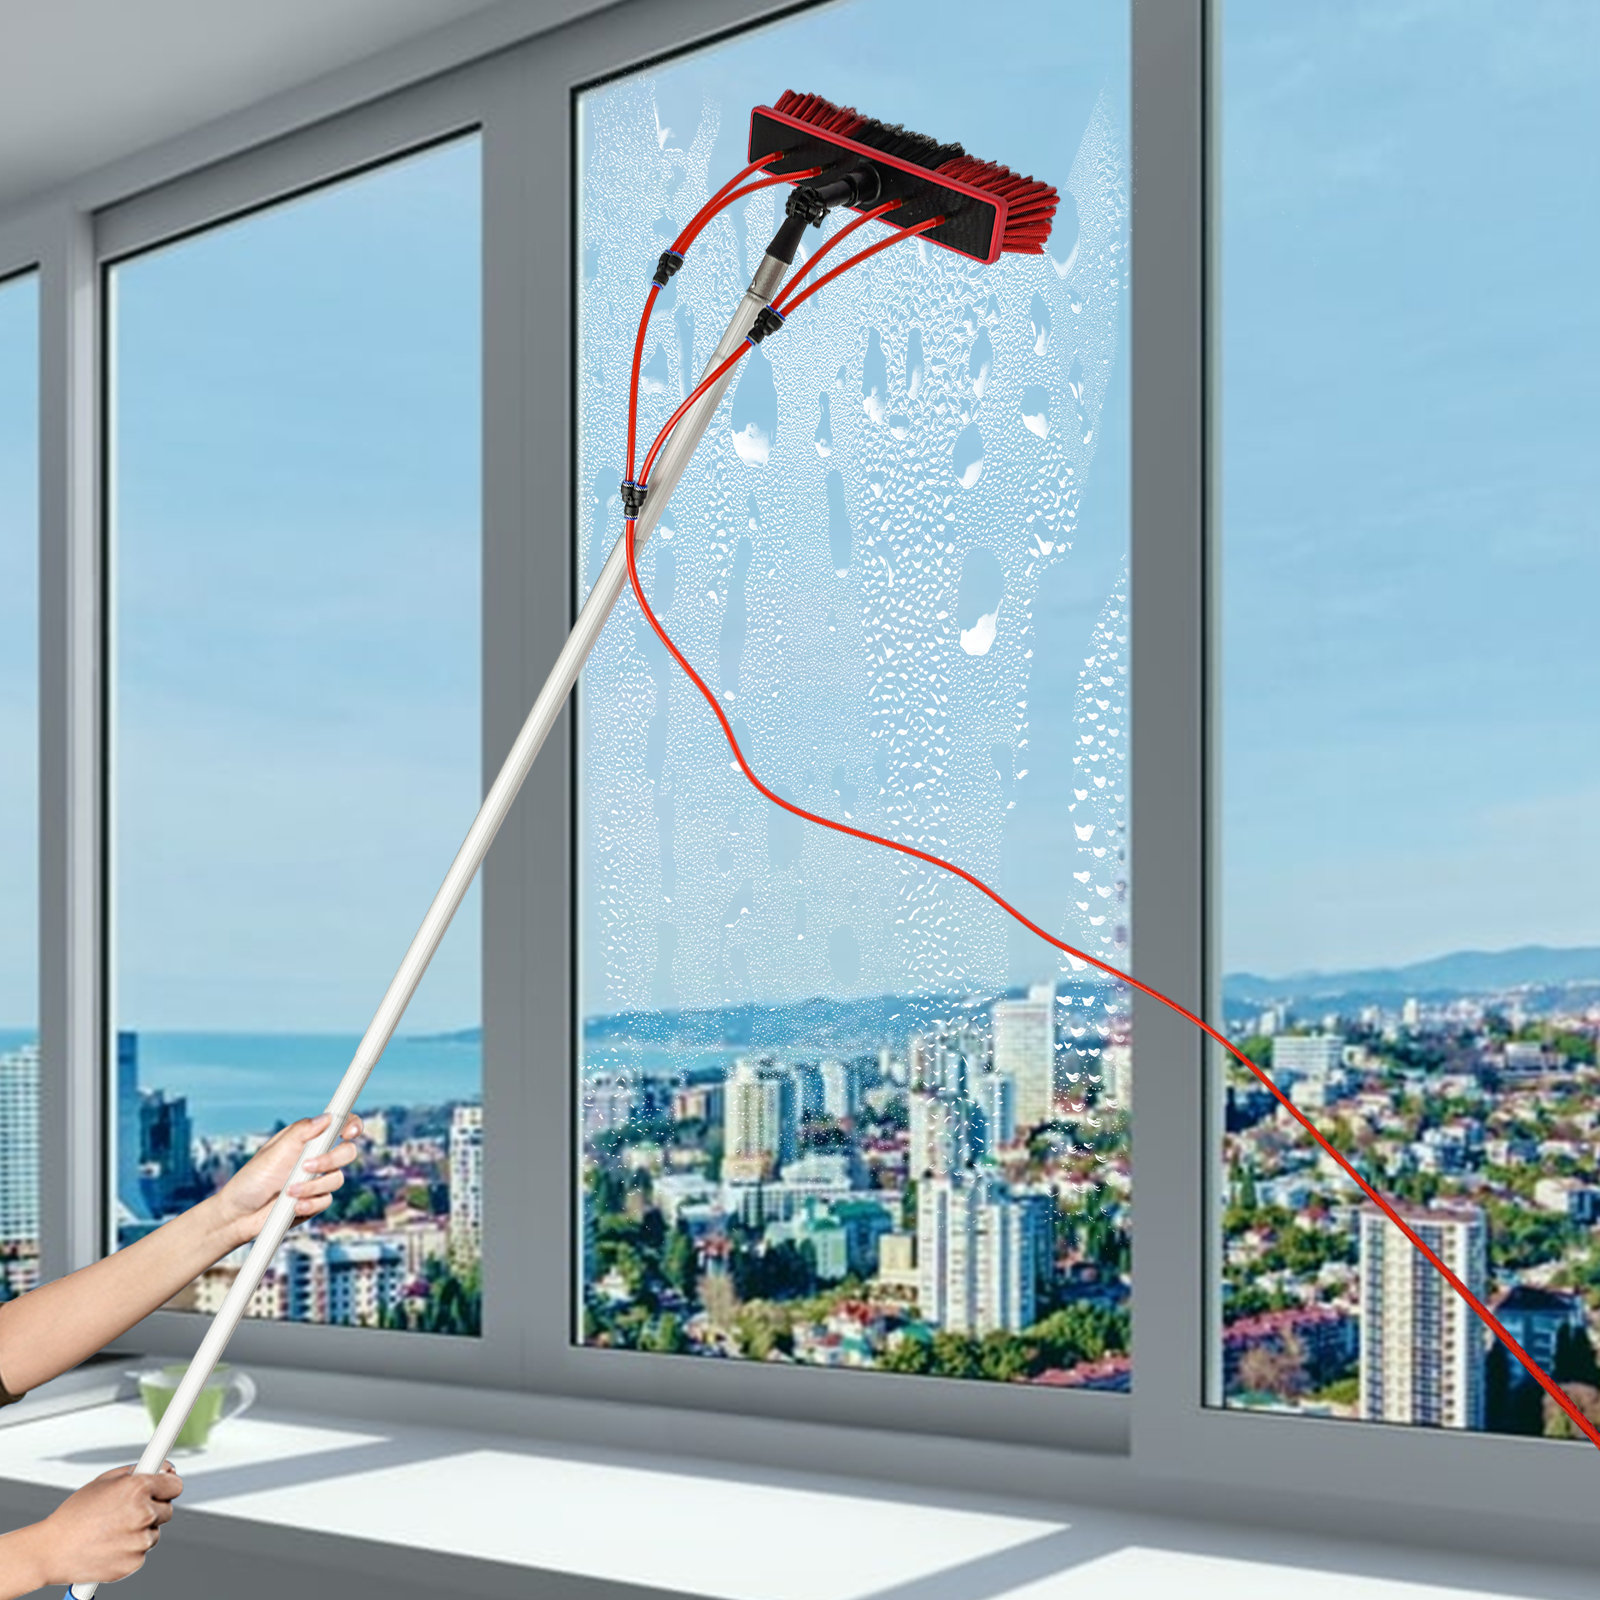 Window Washing Kit Cleaning Brush, Water Fed Pole Kit